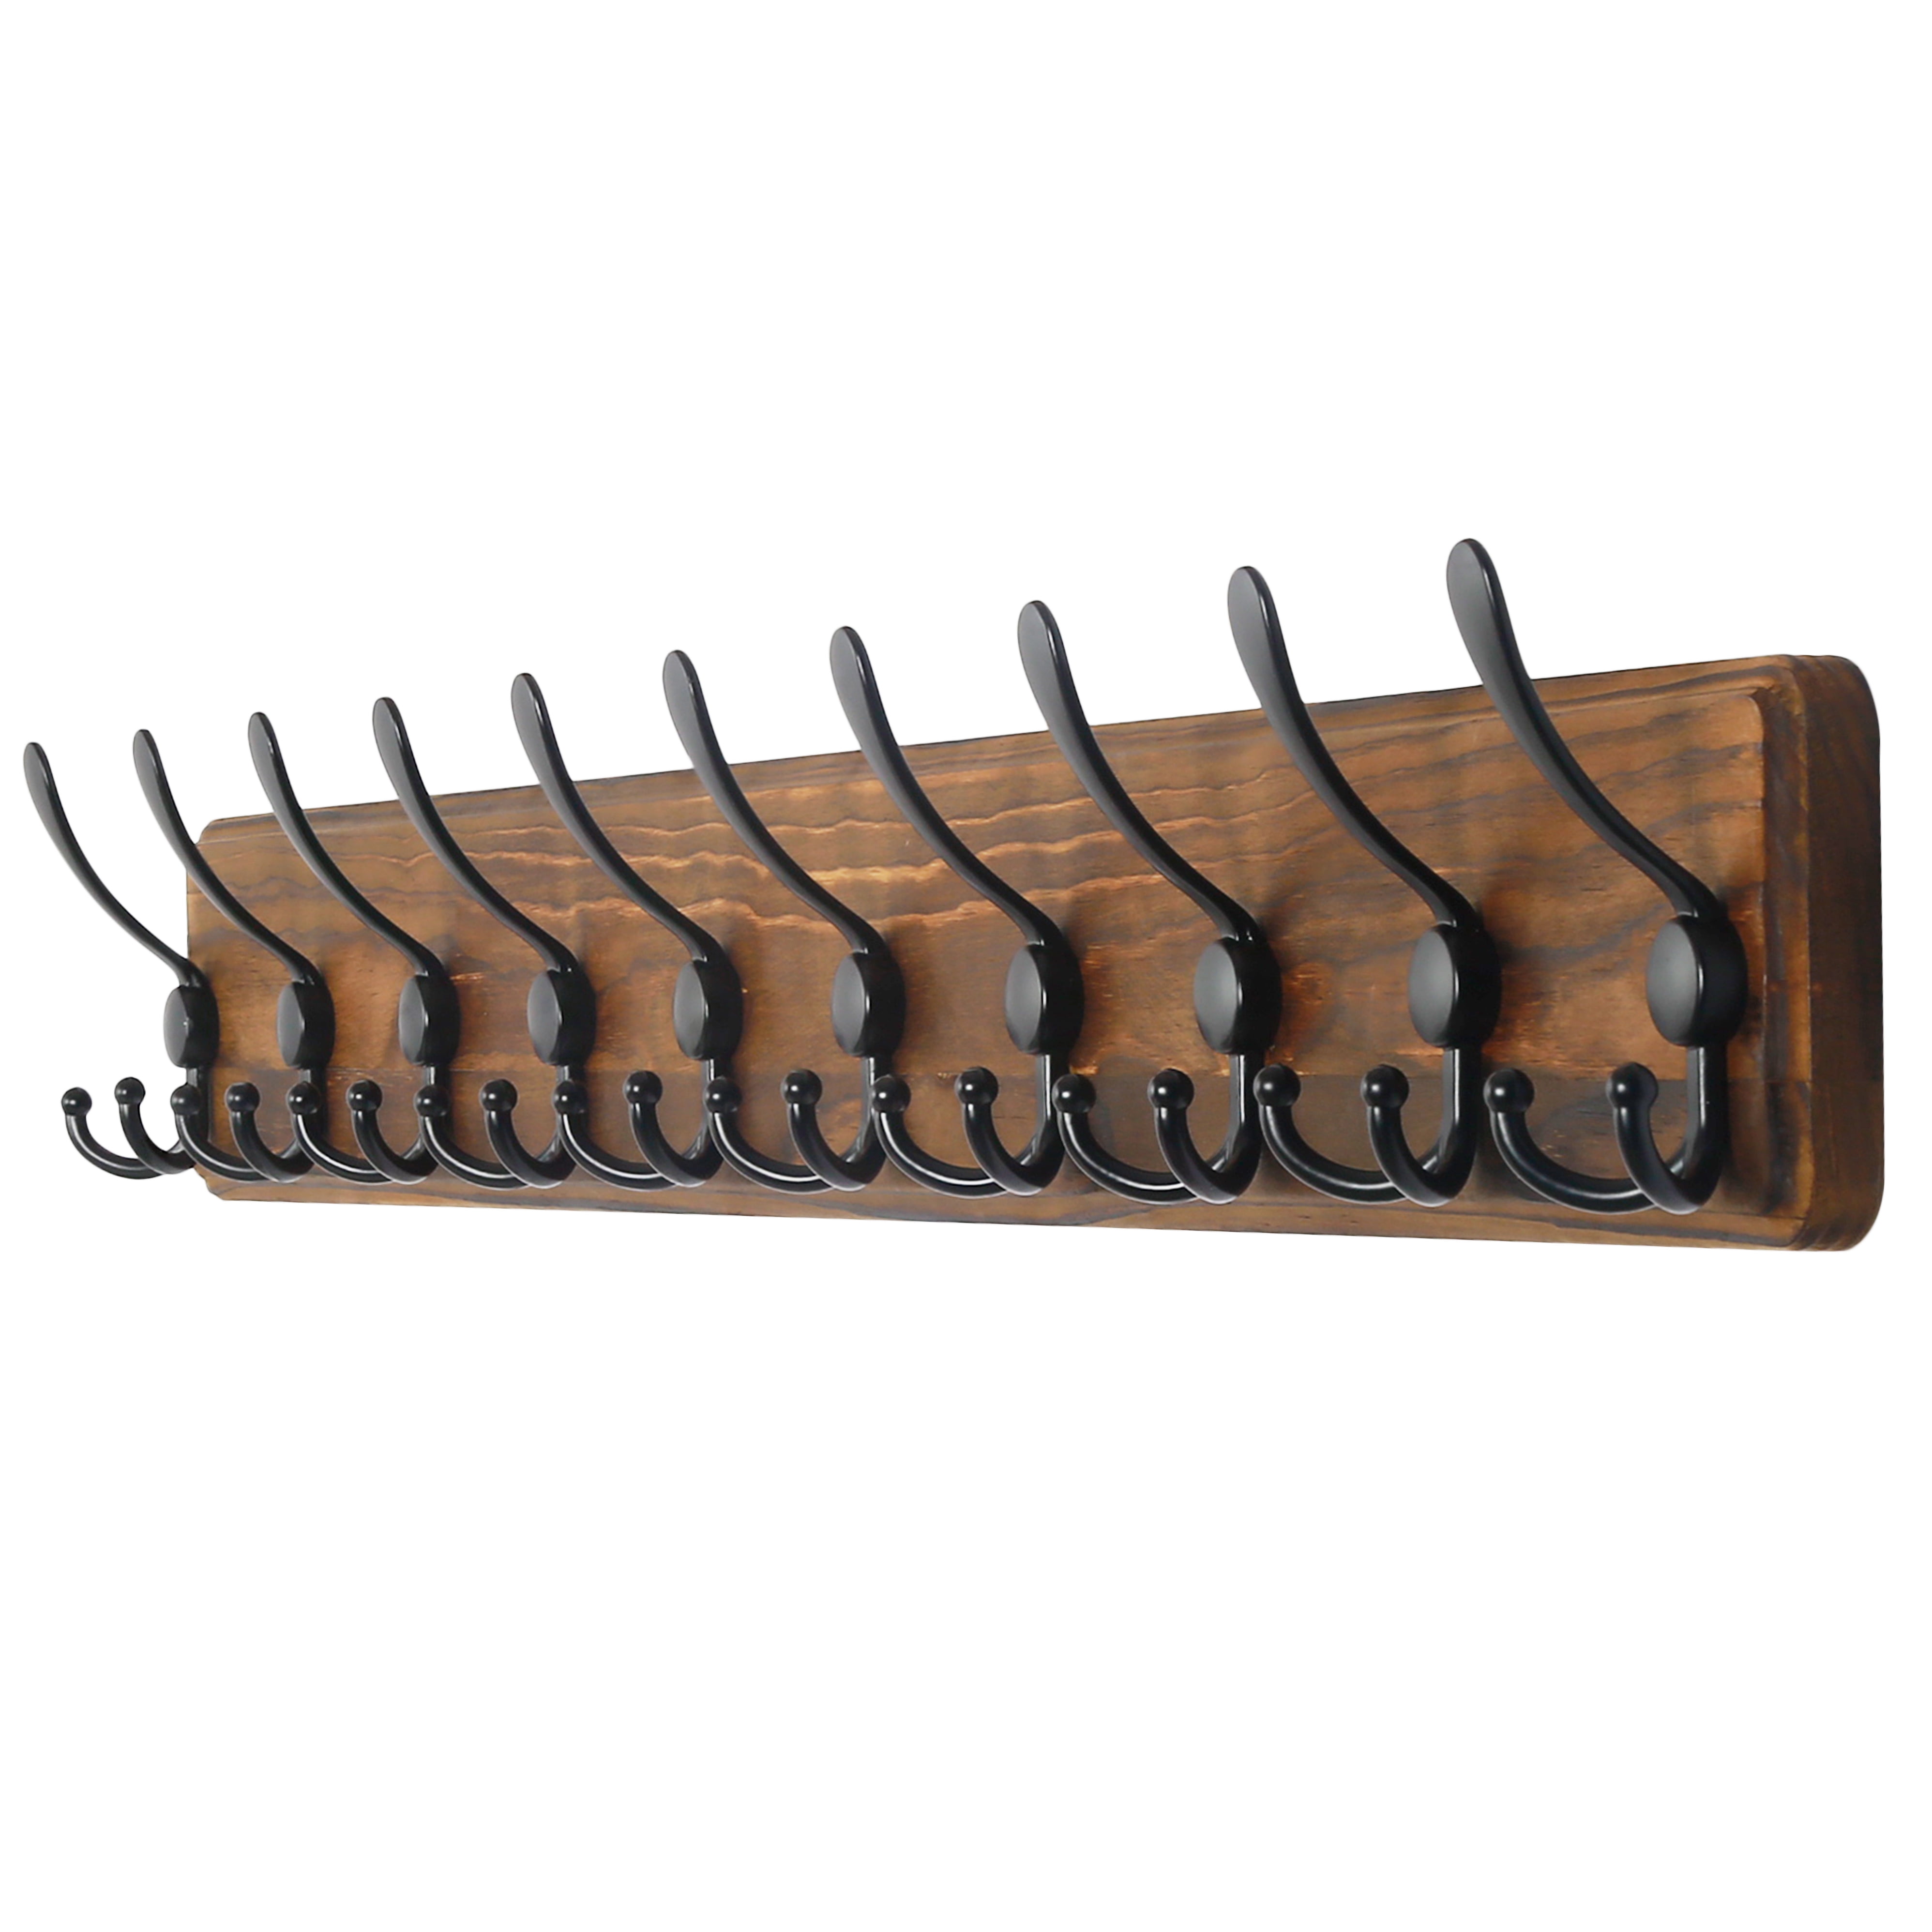 Dseap Wooden Huge Rustic Coat Rack with 10 Tri Hooks,Sturdy Vintage ...